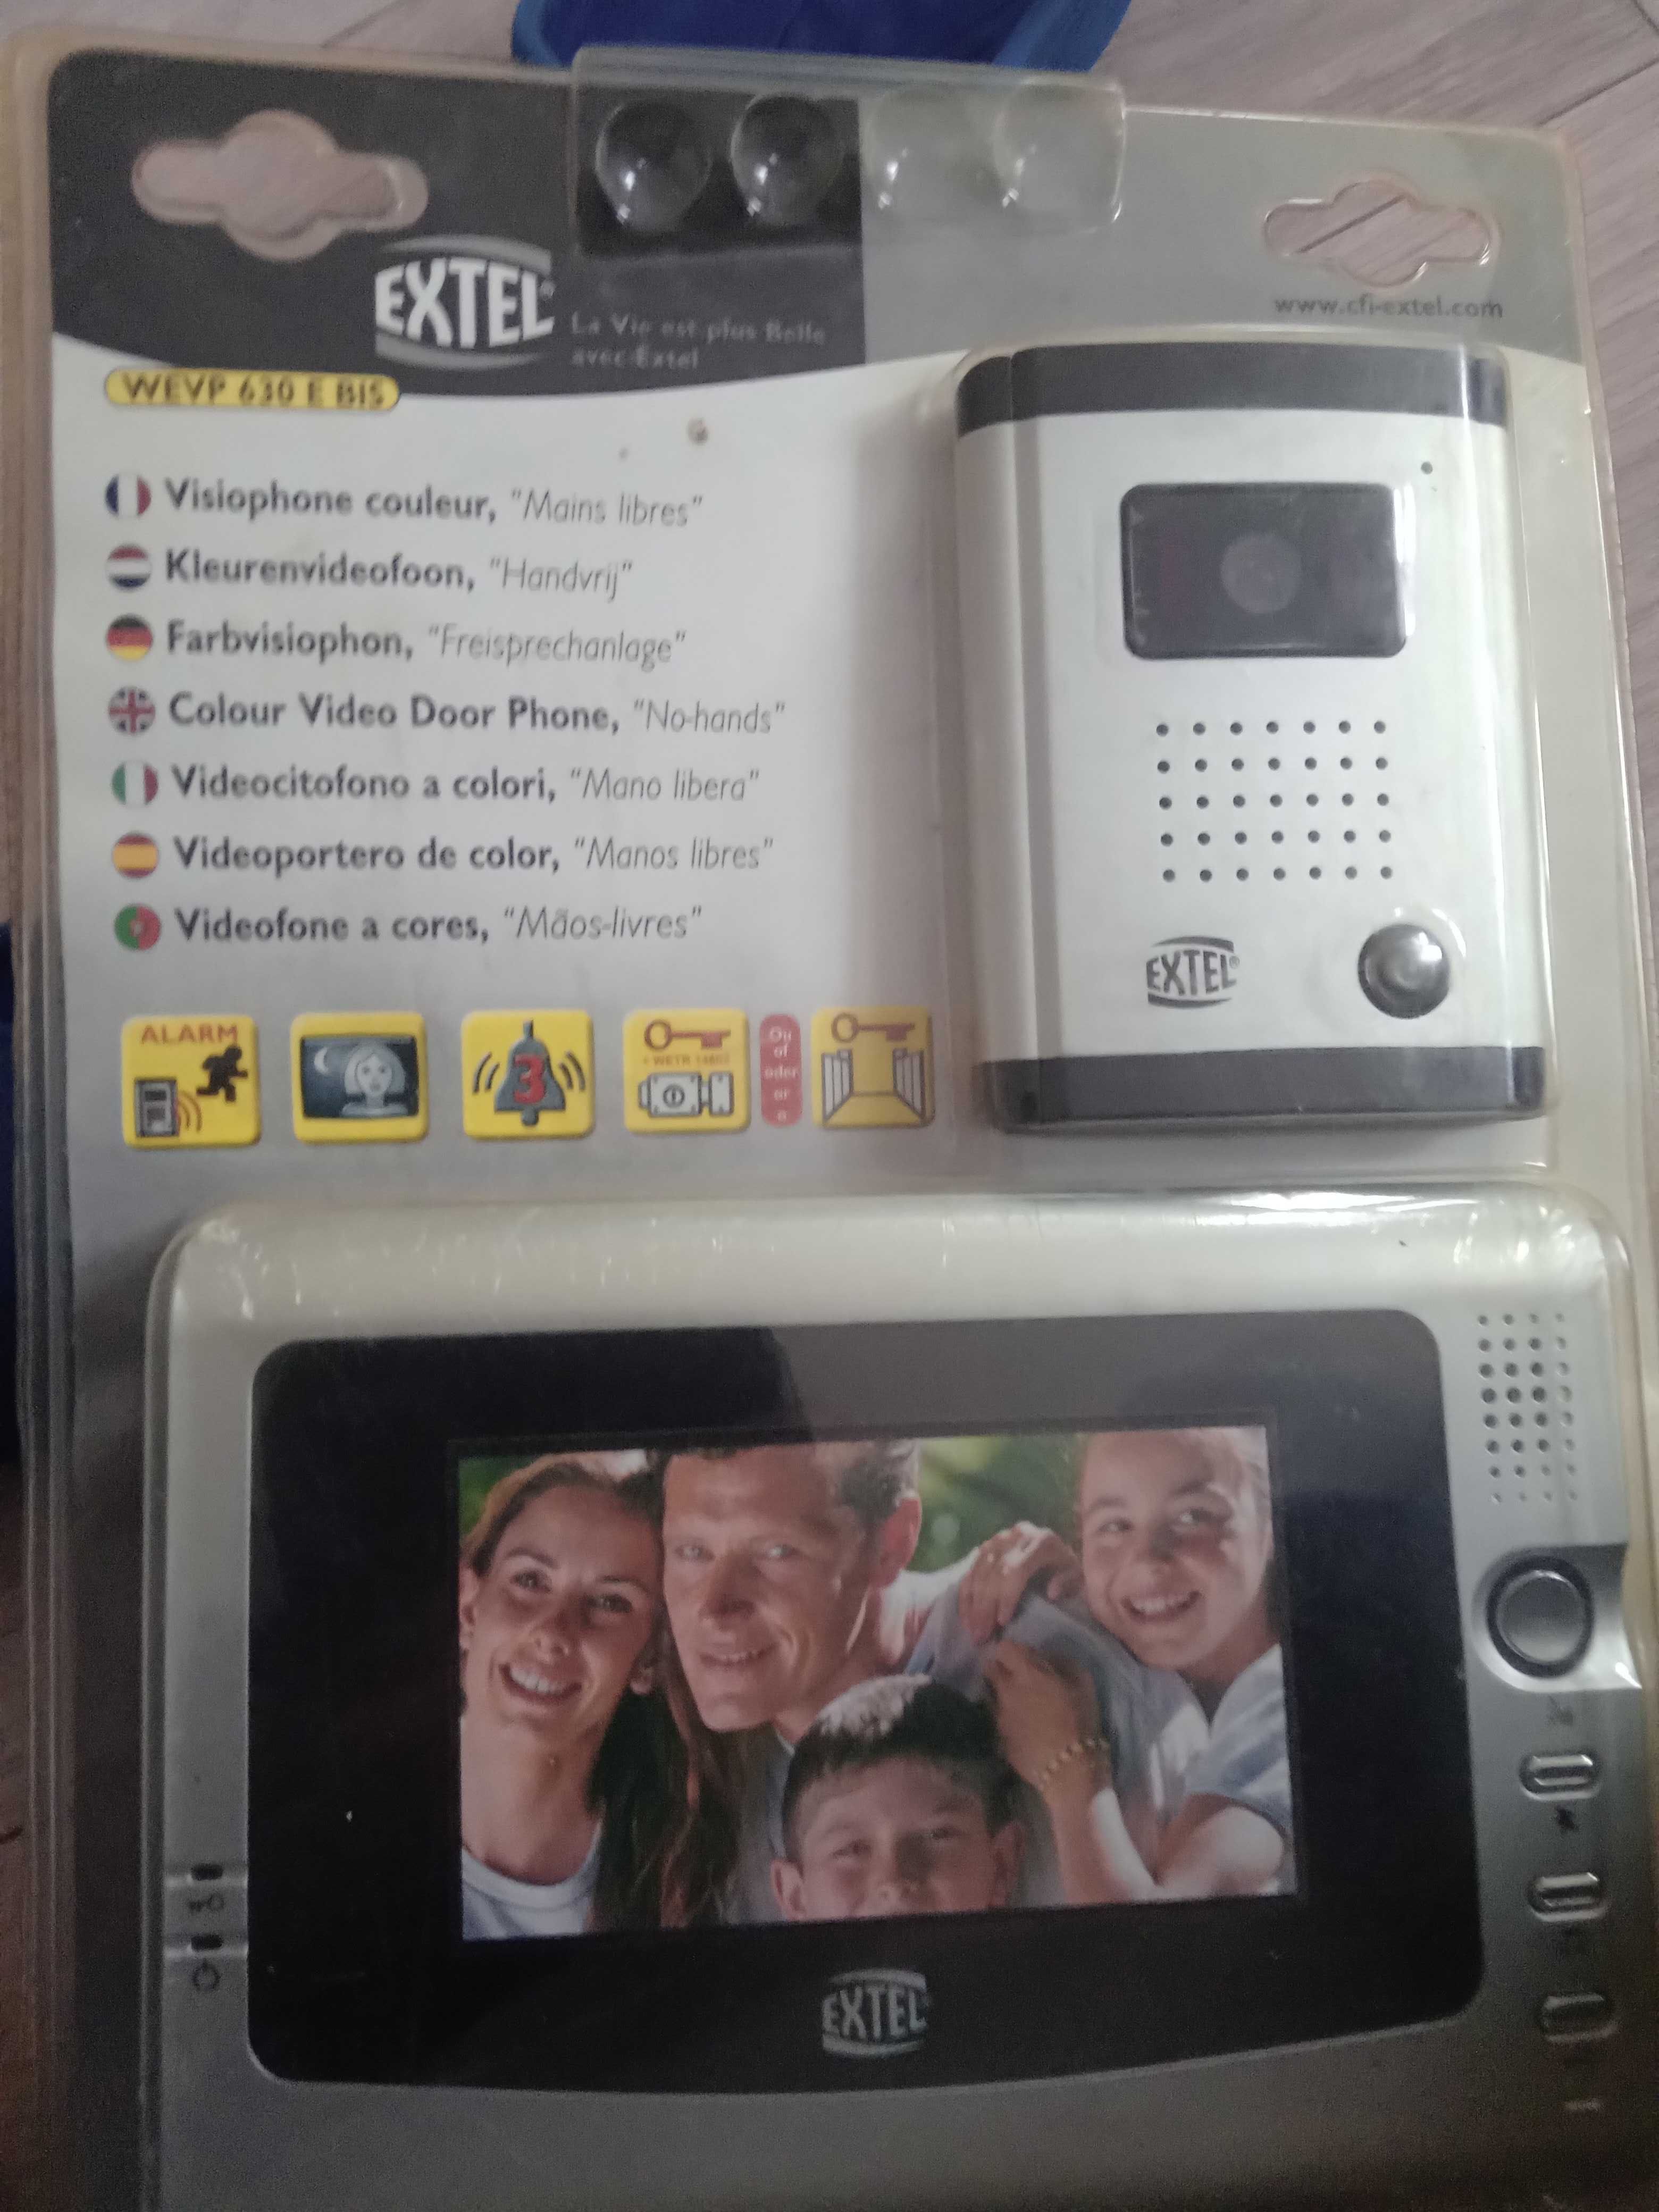 WIdeodomofon Extel WEVP 630 EBIS